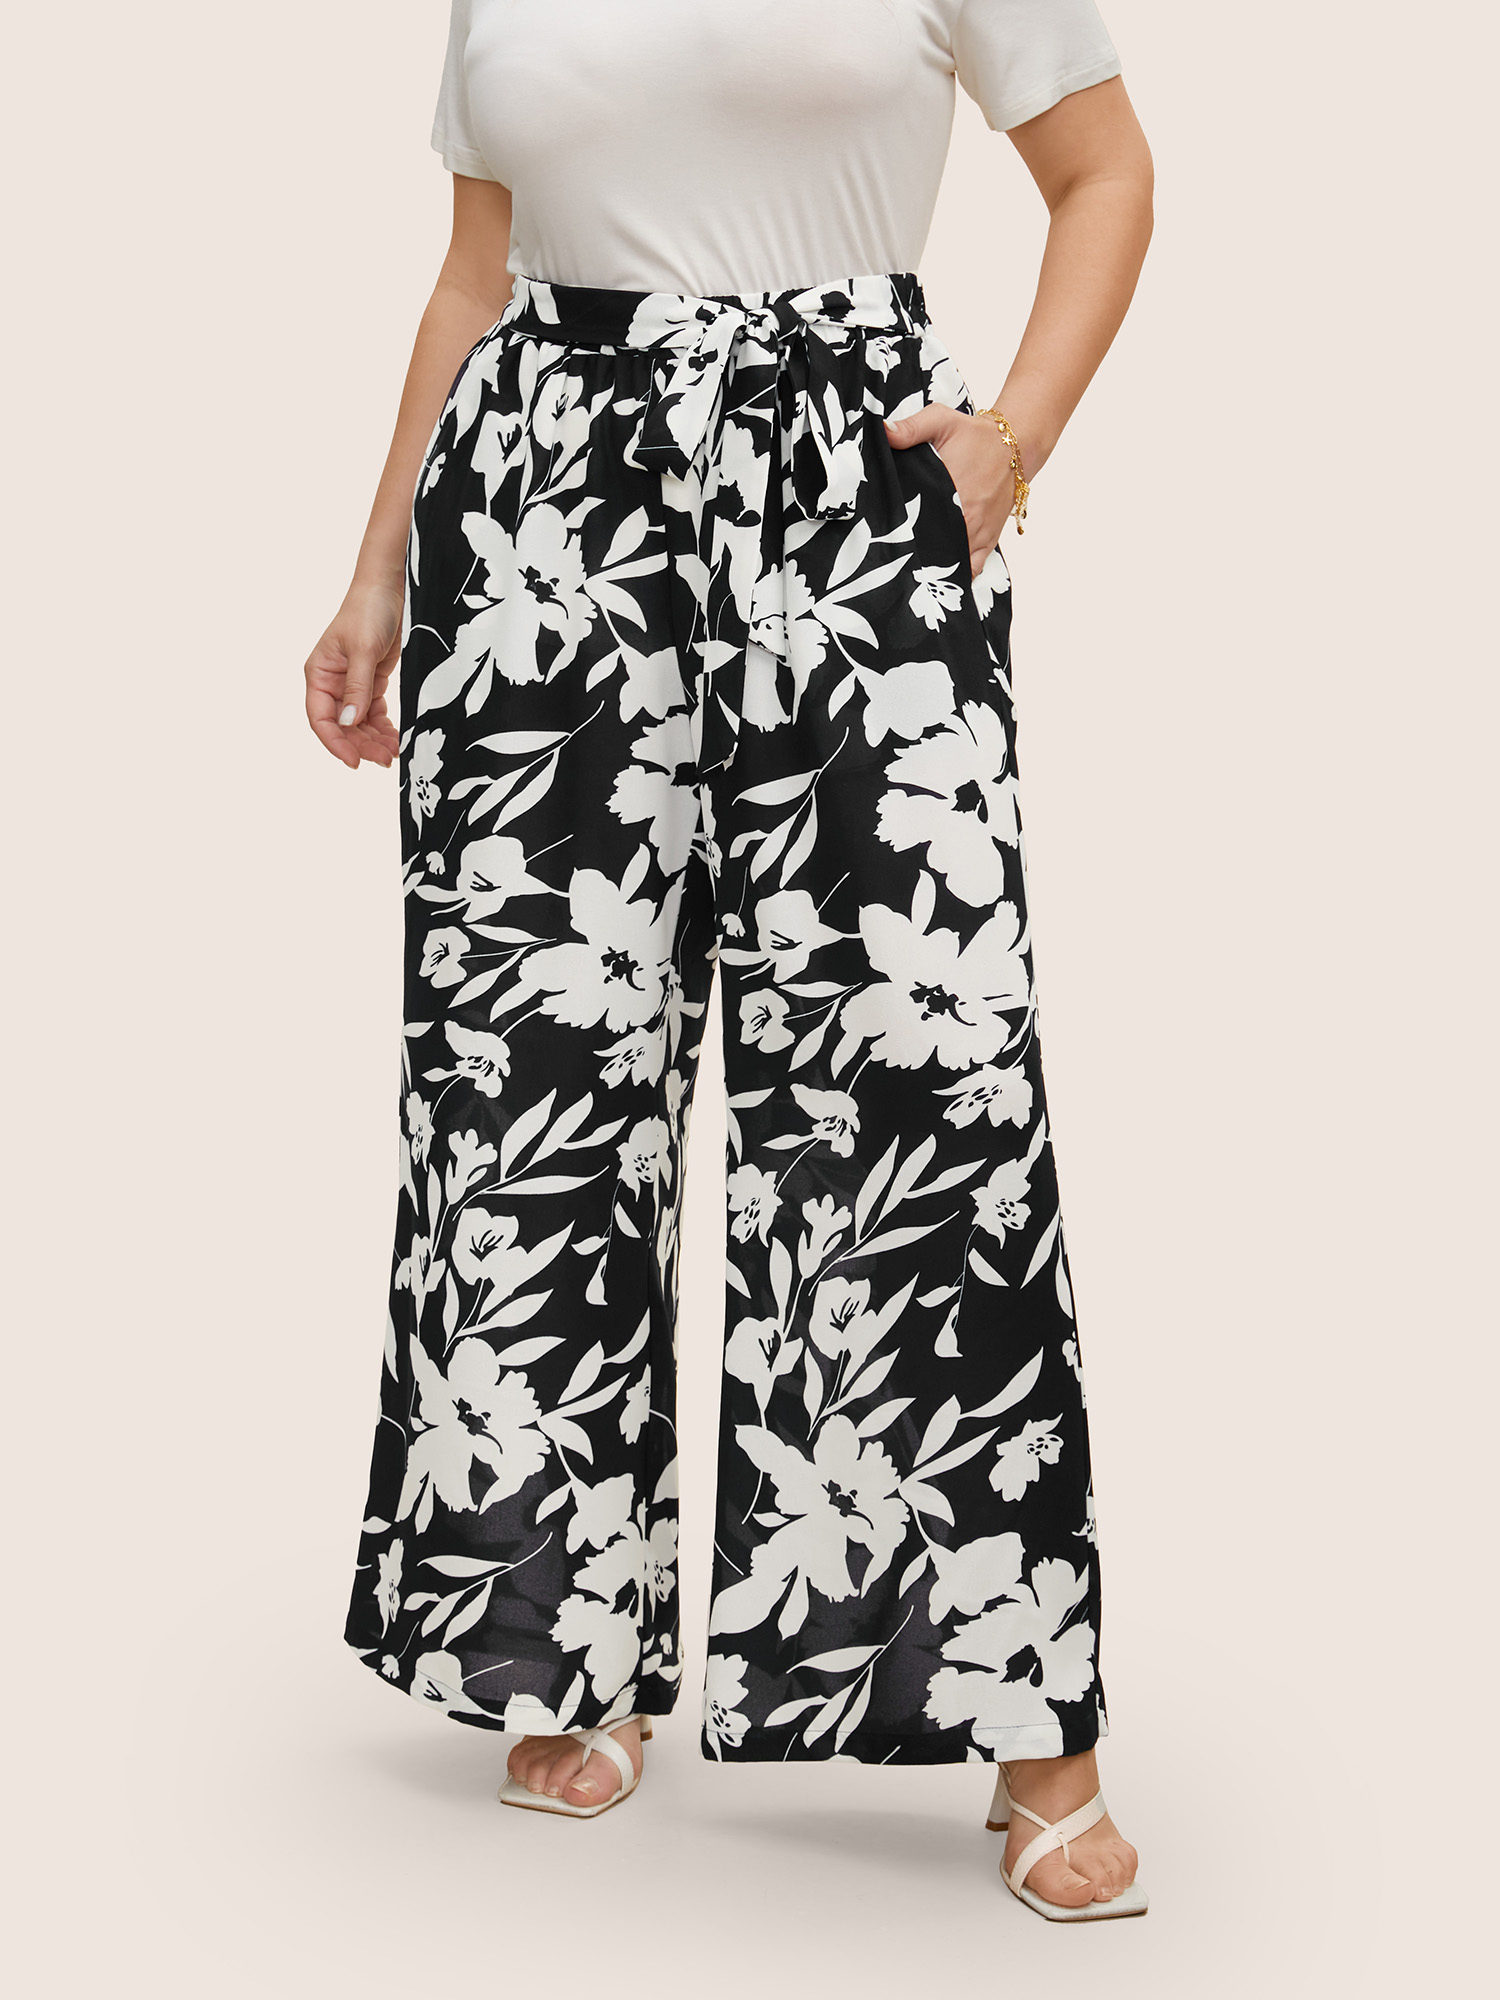 

Plus Size Silhouette Floral Print Ties Side Seam Pocket Pants Women Black Elegant Wide Leg High Rise Everyday Pants BloomChic